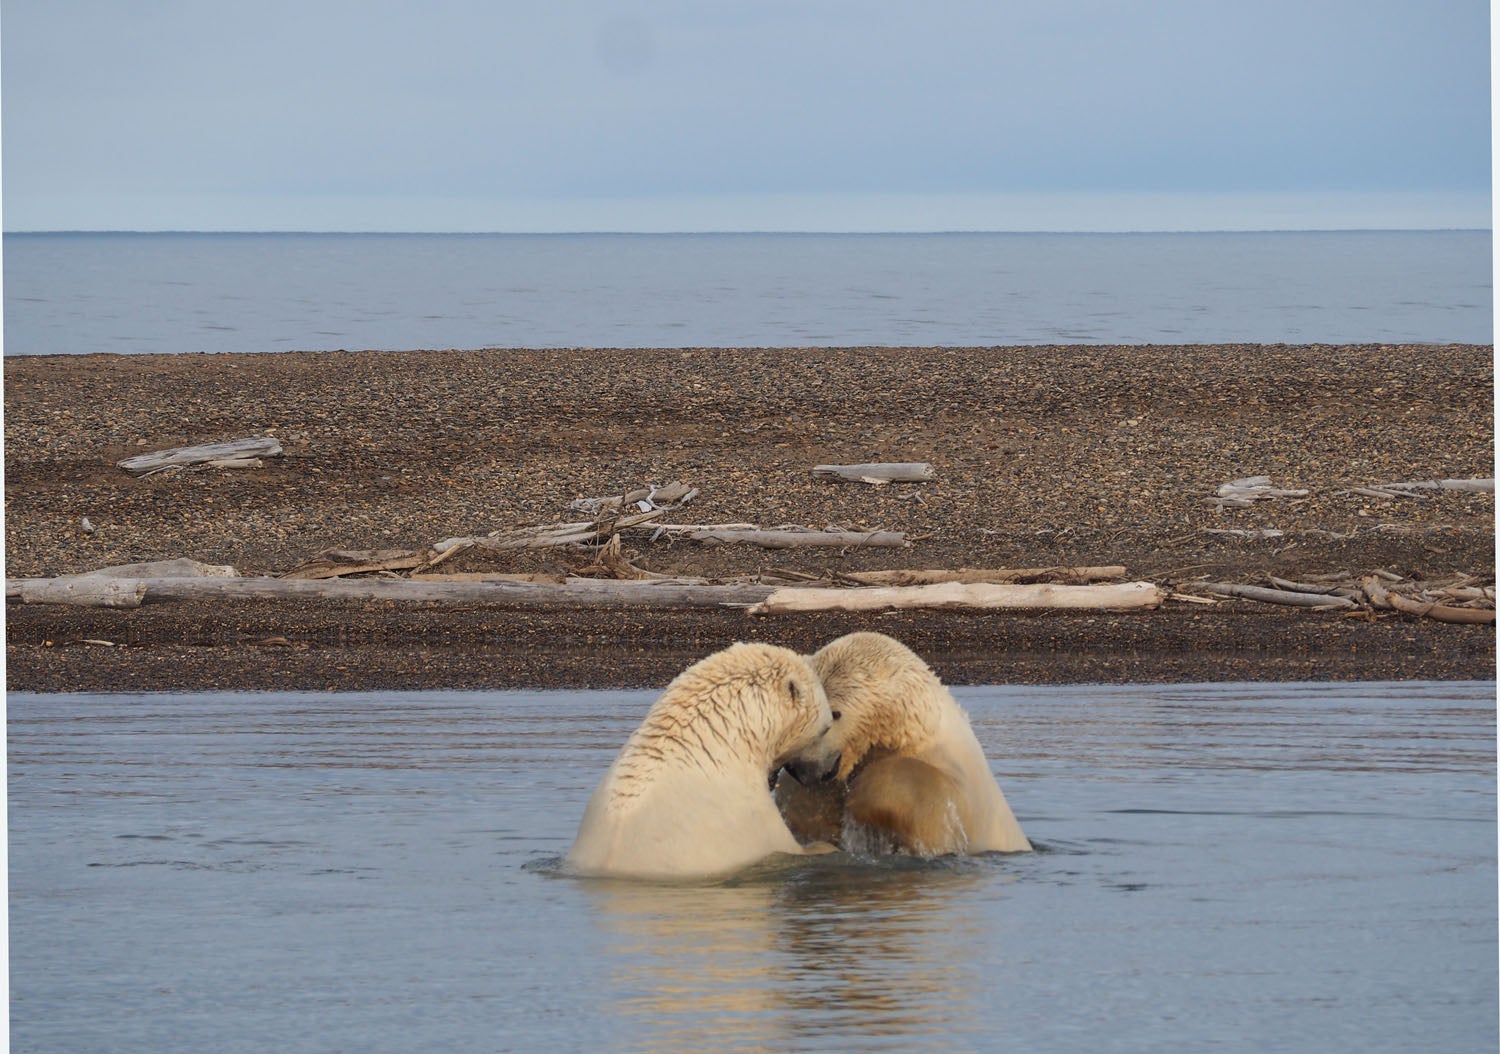 Two male polar bears wrestle in the shallows near Kaktovik